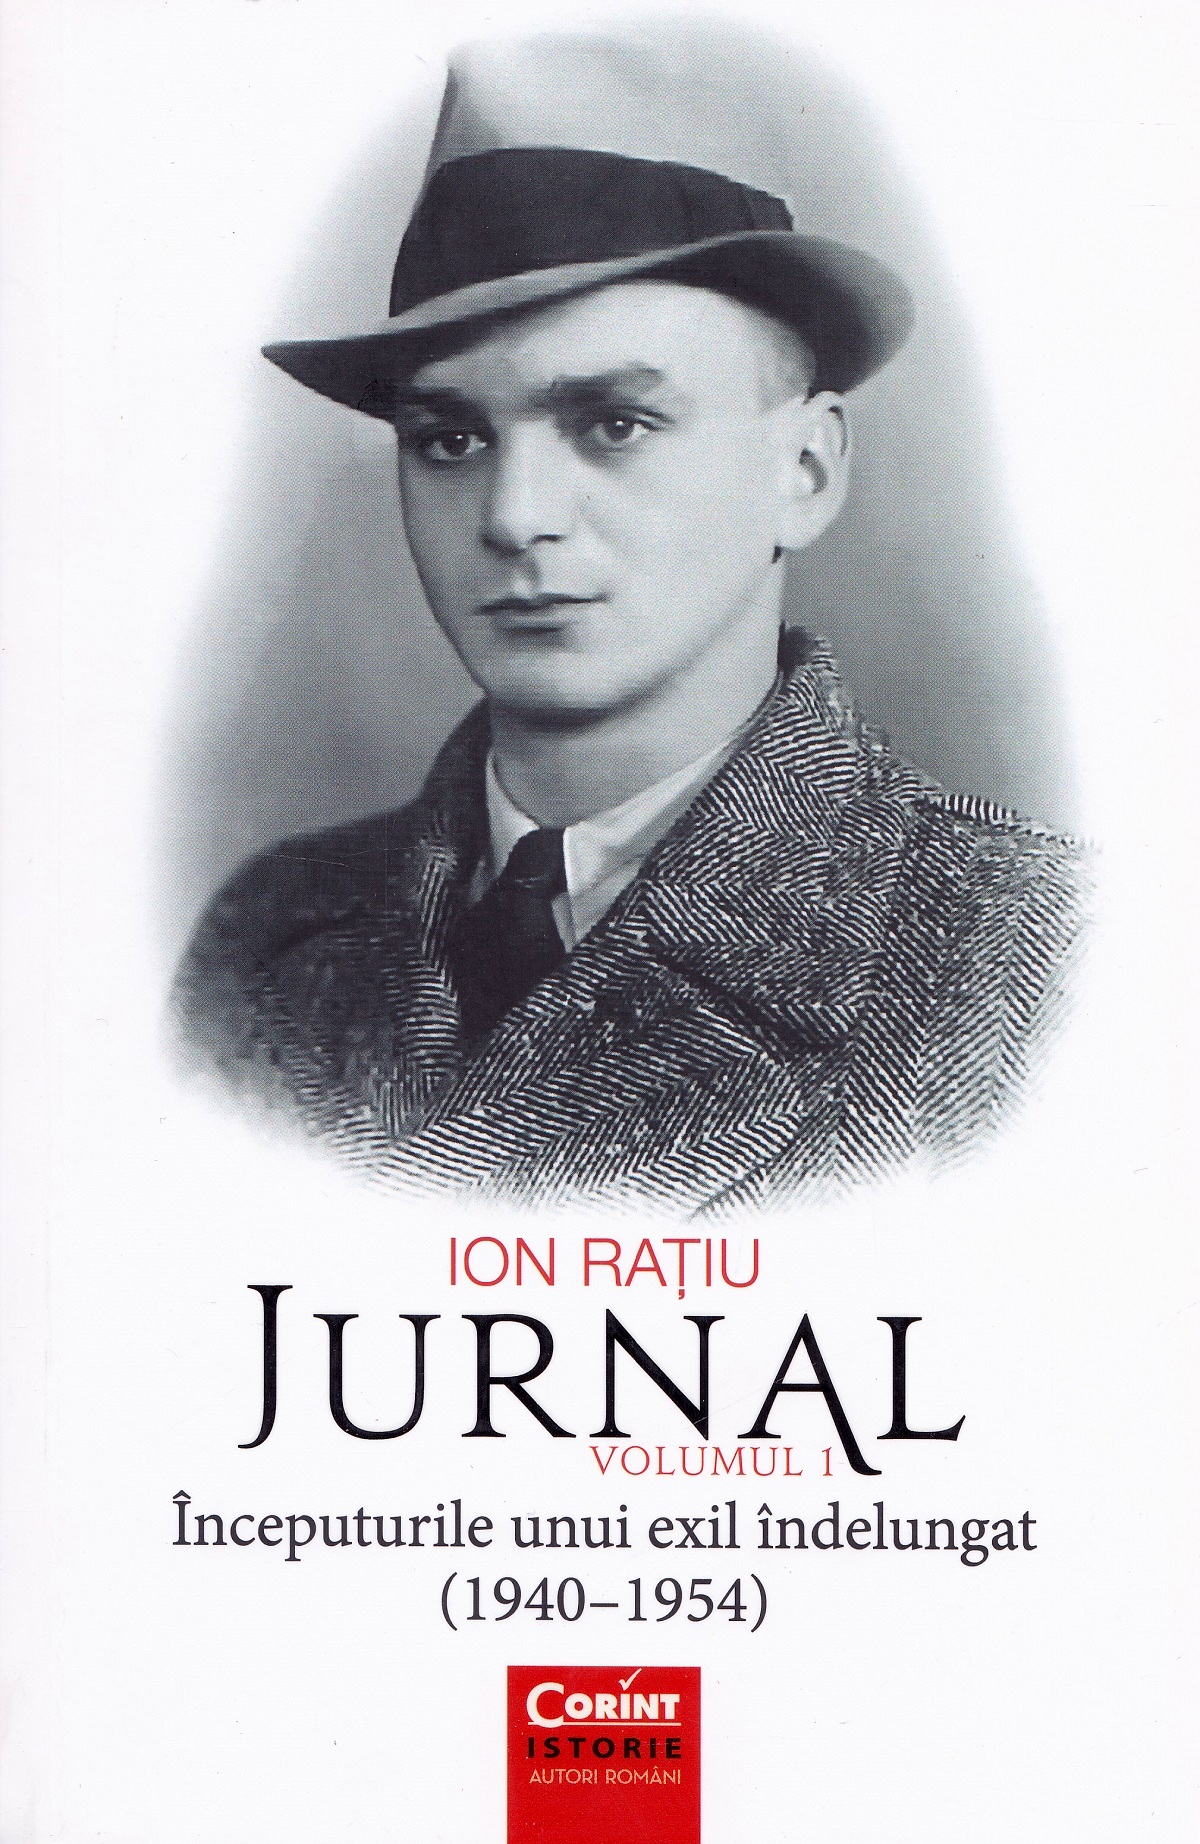 Jurnal vol.1: Inceputurile unui exil indelungat (1940-1945) - Ion Ratiu 